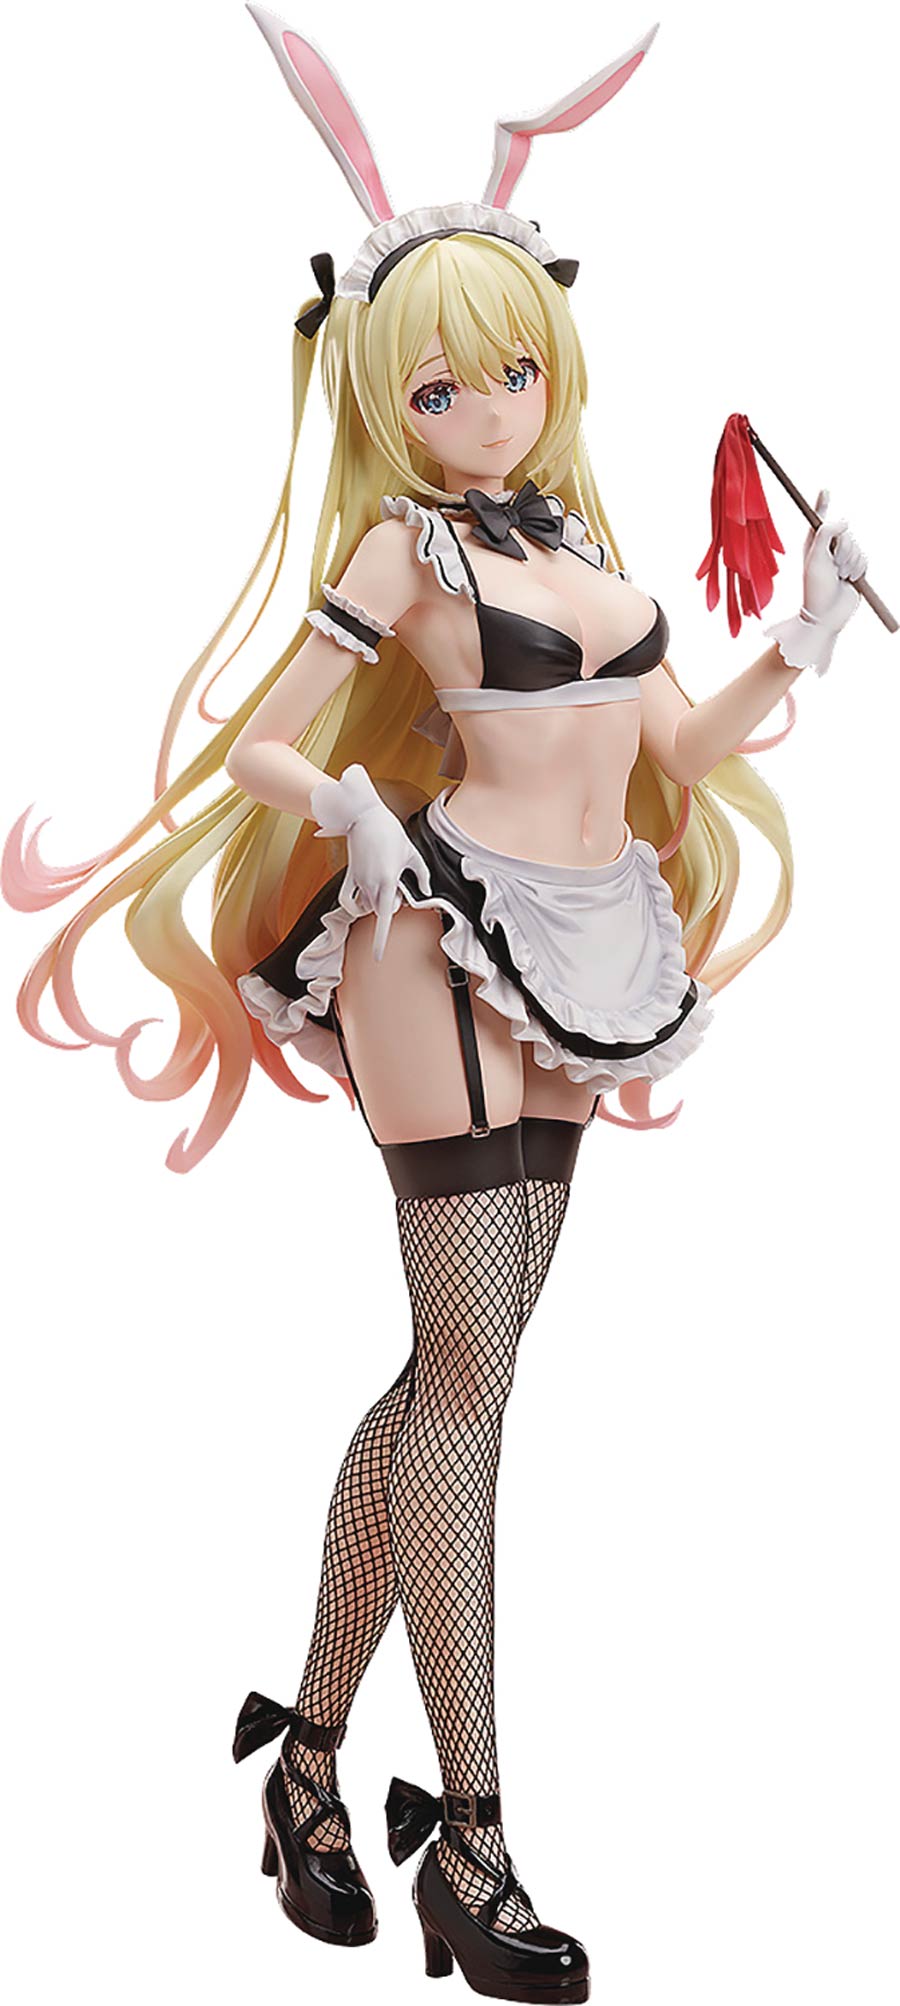 DSmile Original Character Eruru Bunny Maid 1/4 Scale PVC Figure